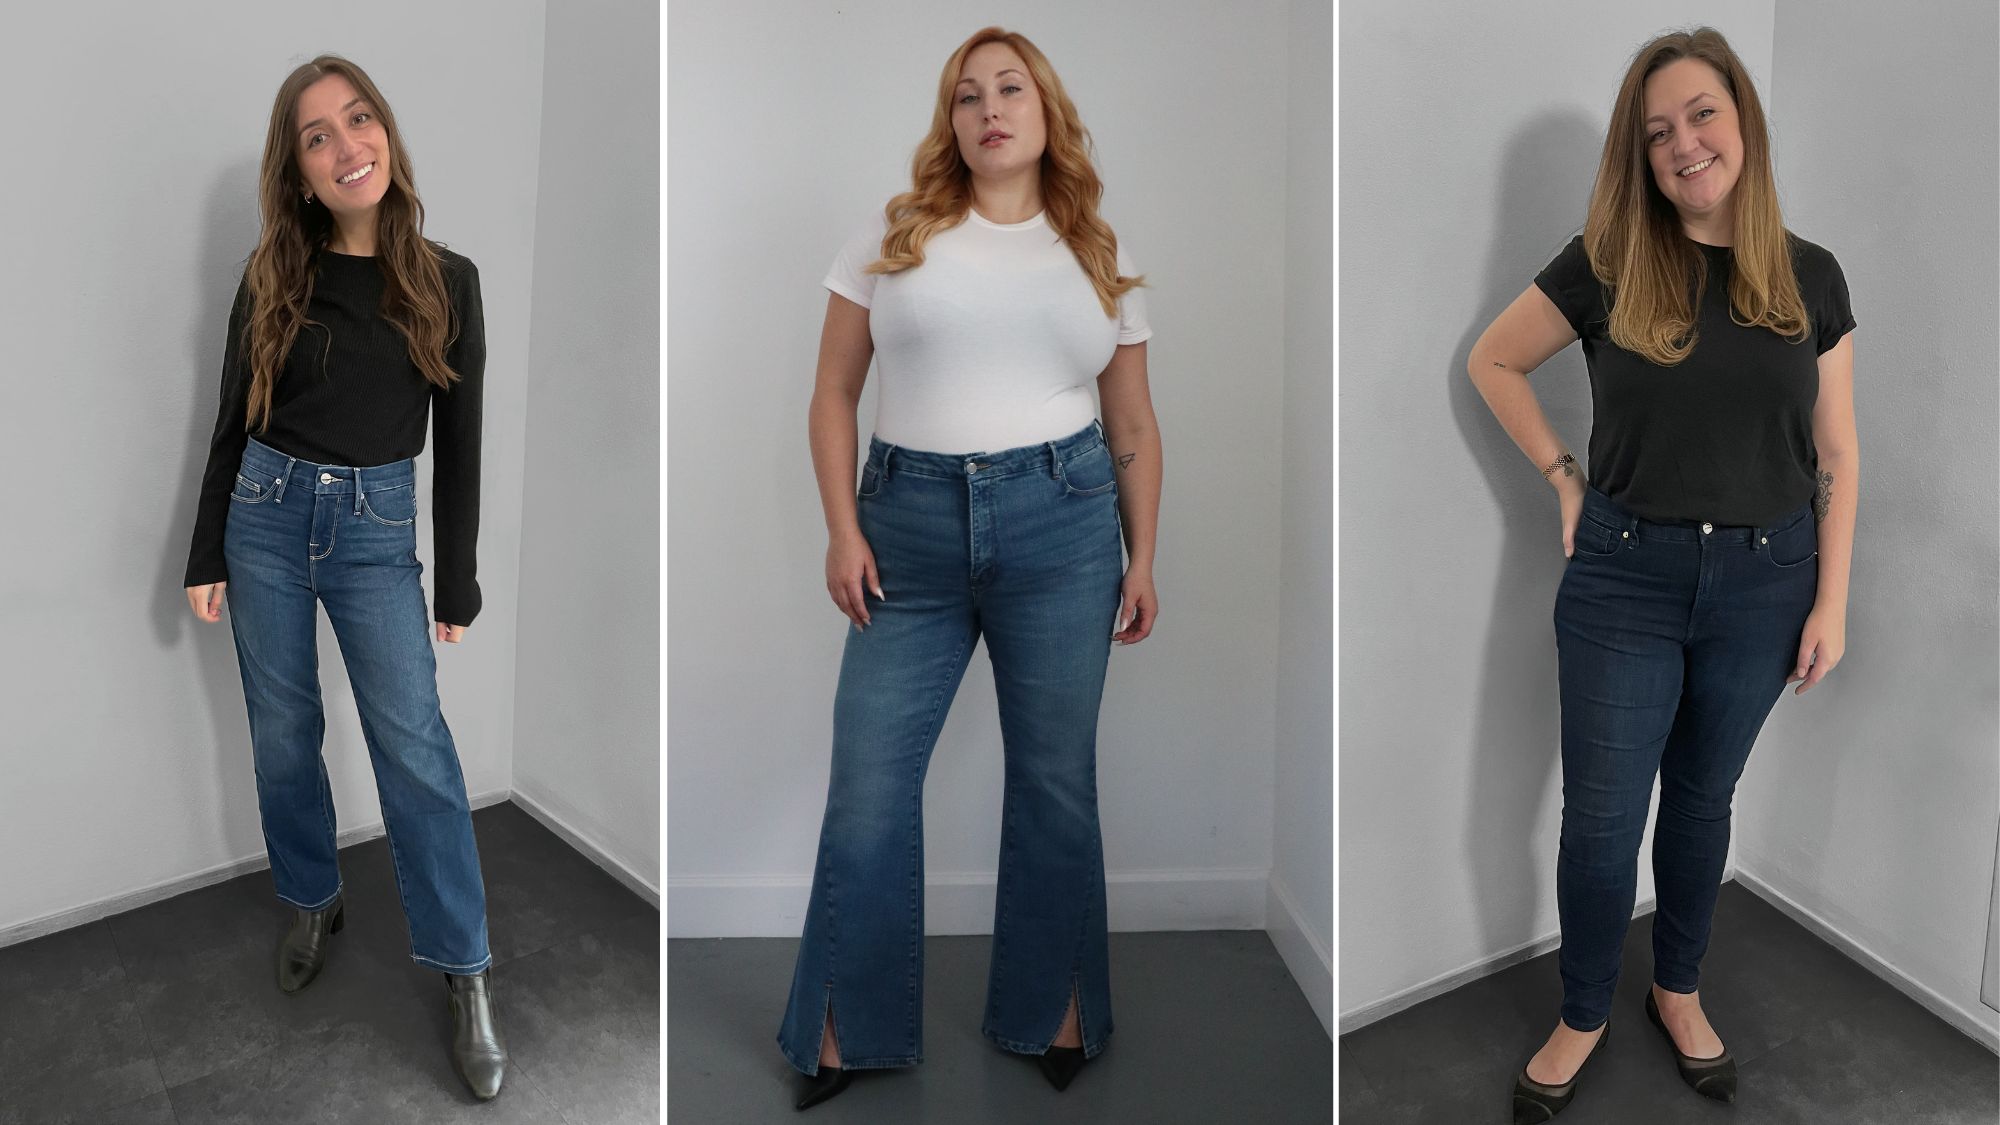 Kourtney Kardashian's Bodysuit OVER Jeans: Would You Try The